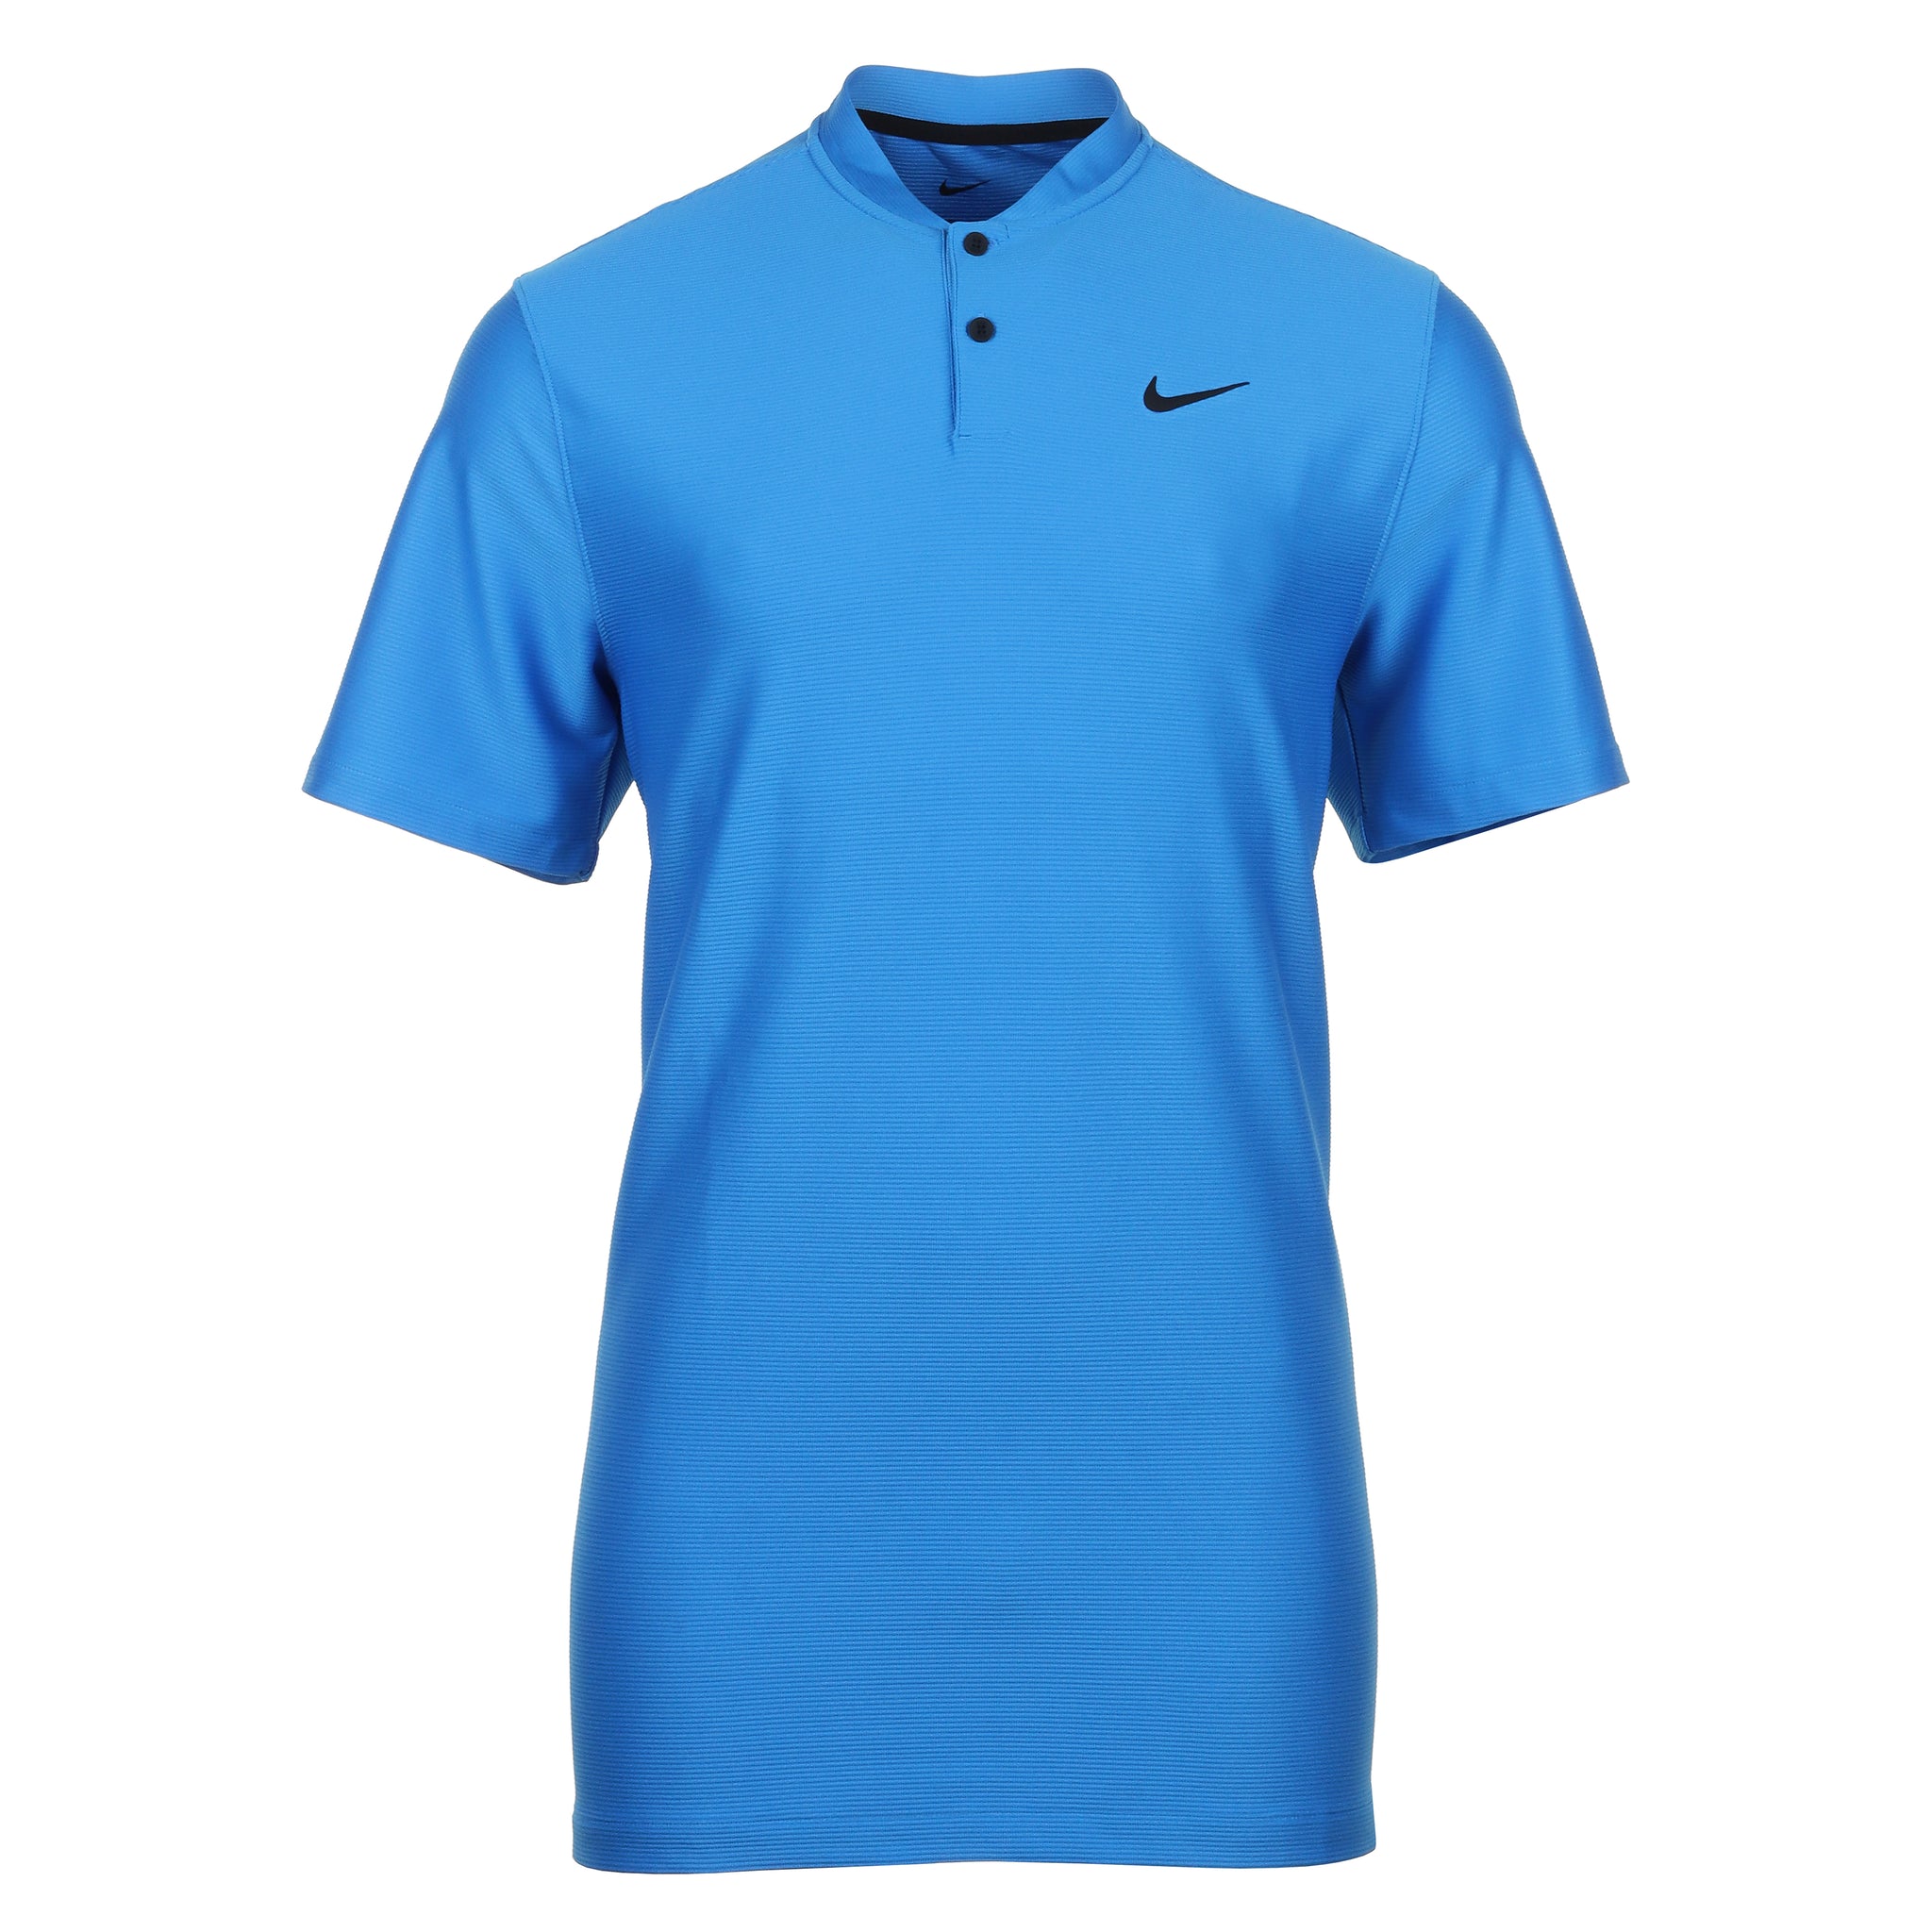 Nike Golf Dri-Fit Tour Texture Shirt